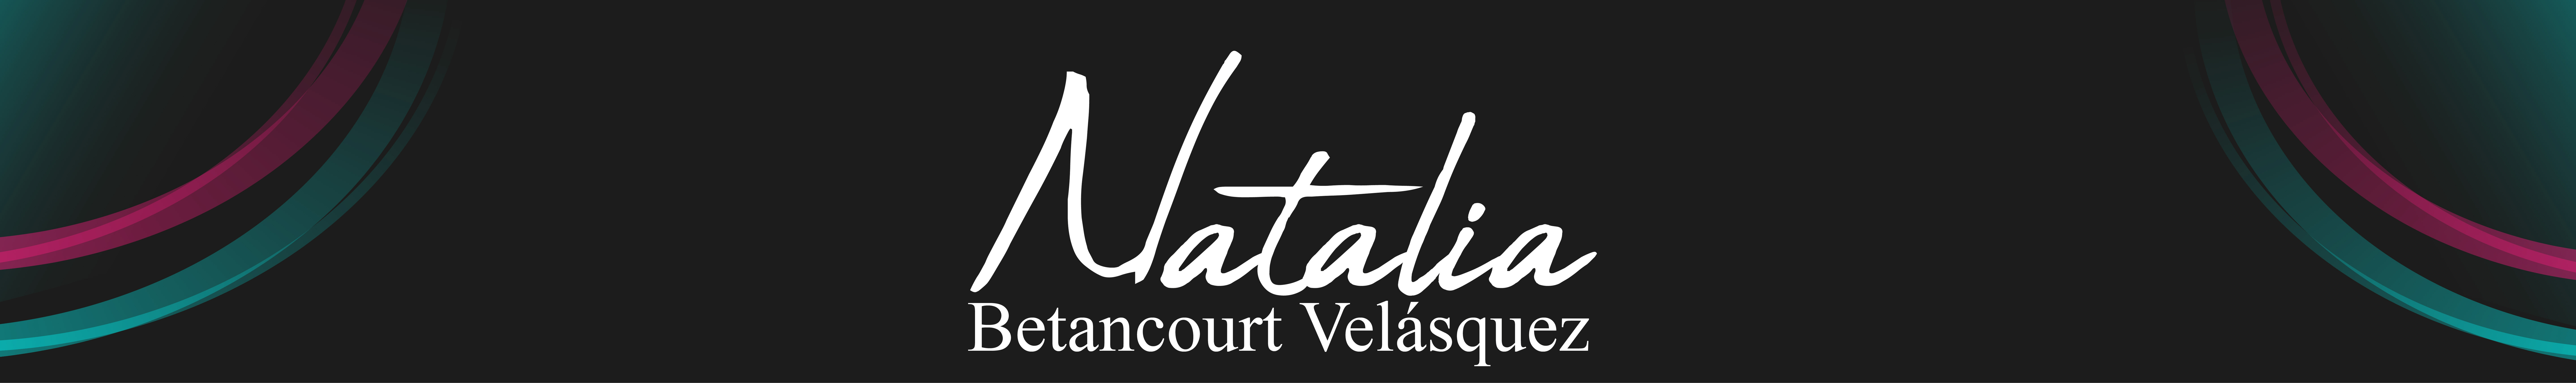 Profielbanner van Natalia Betancourt Velásquez